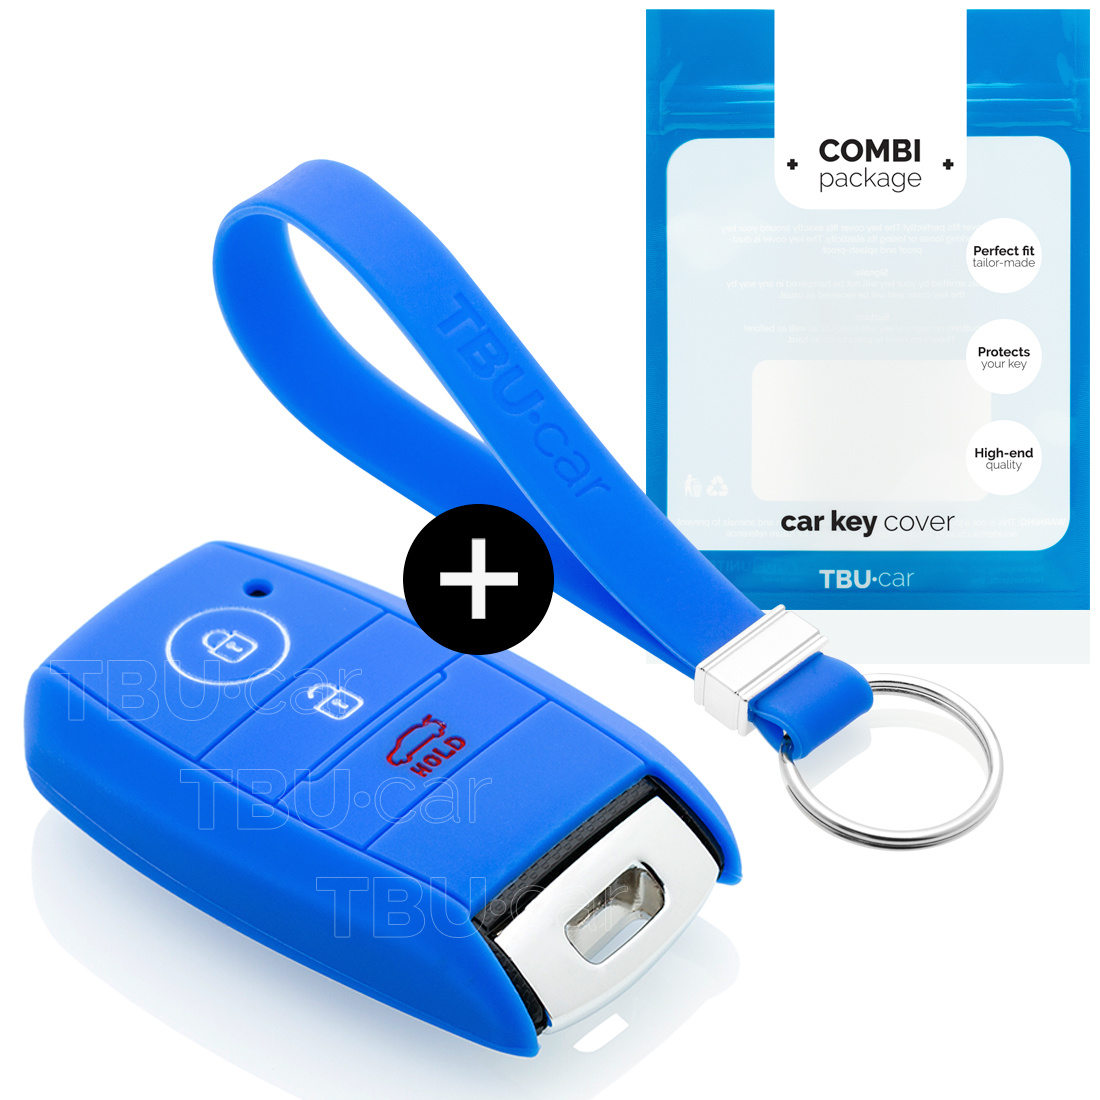 TBU car Autoschlüssel Hülle kompatibel mit Kia 3 Tasten (Keyless Entry) -  Schutzhülle aus Silikon - Auto Schlüsselhülle Cover in Blau